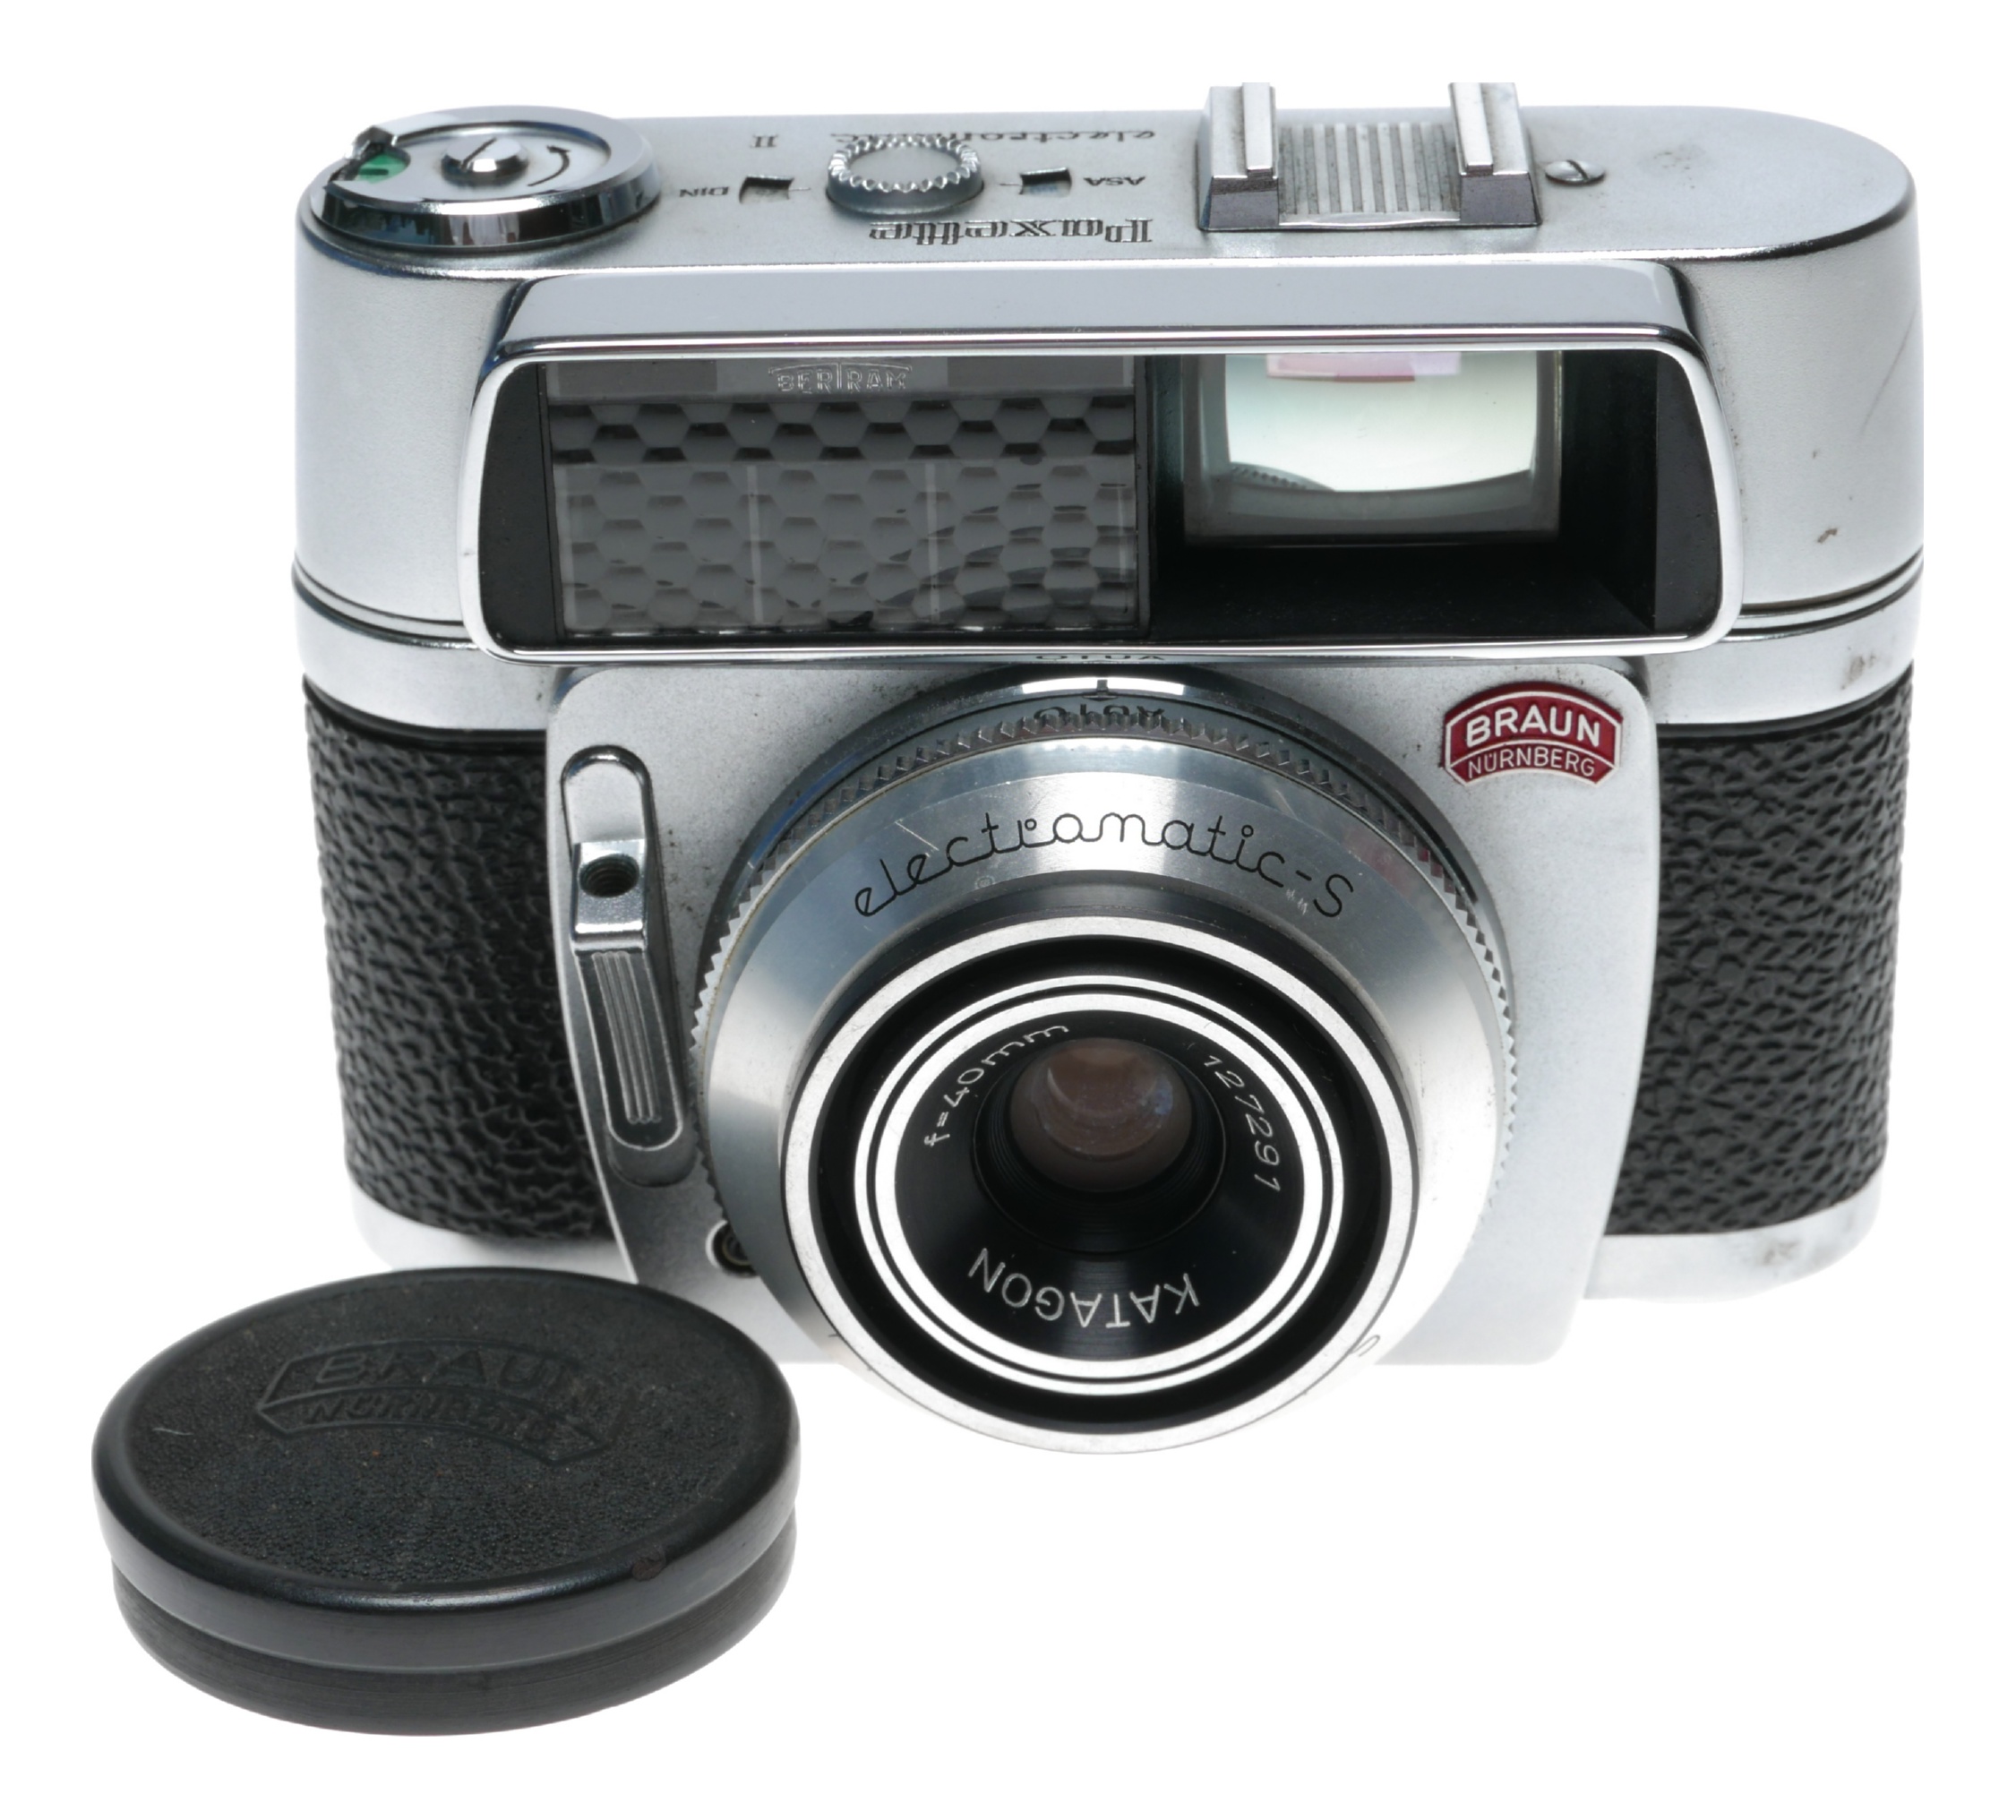 Braun Paxette Electromatic IIS Viewfinder Camera Katagon fu003d40mm